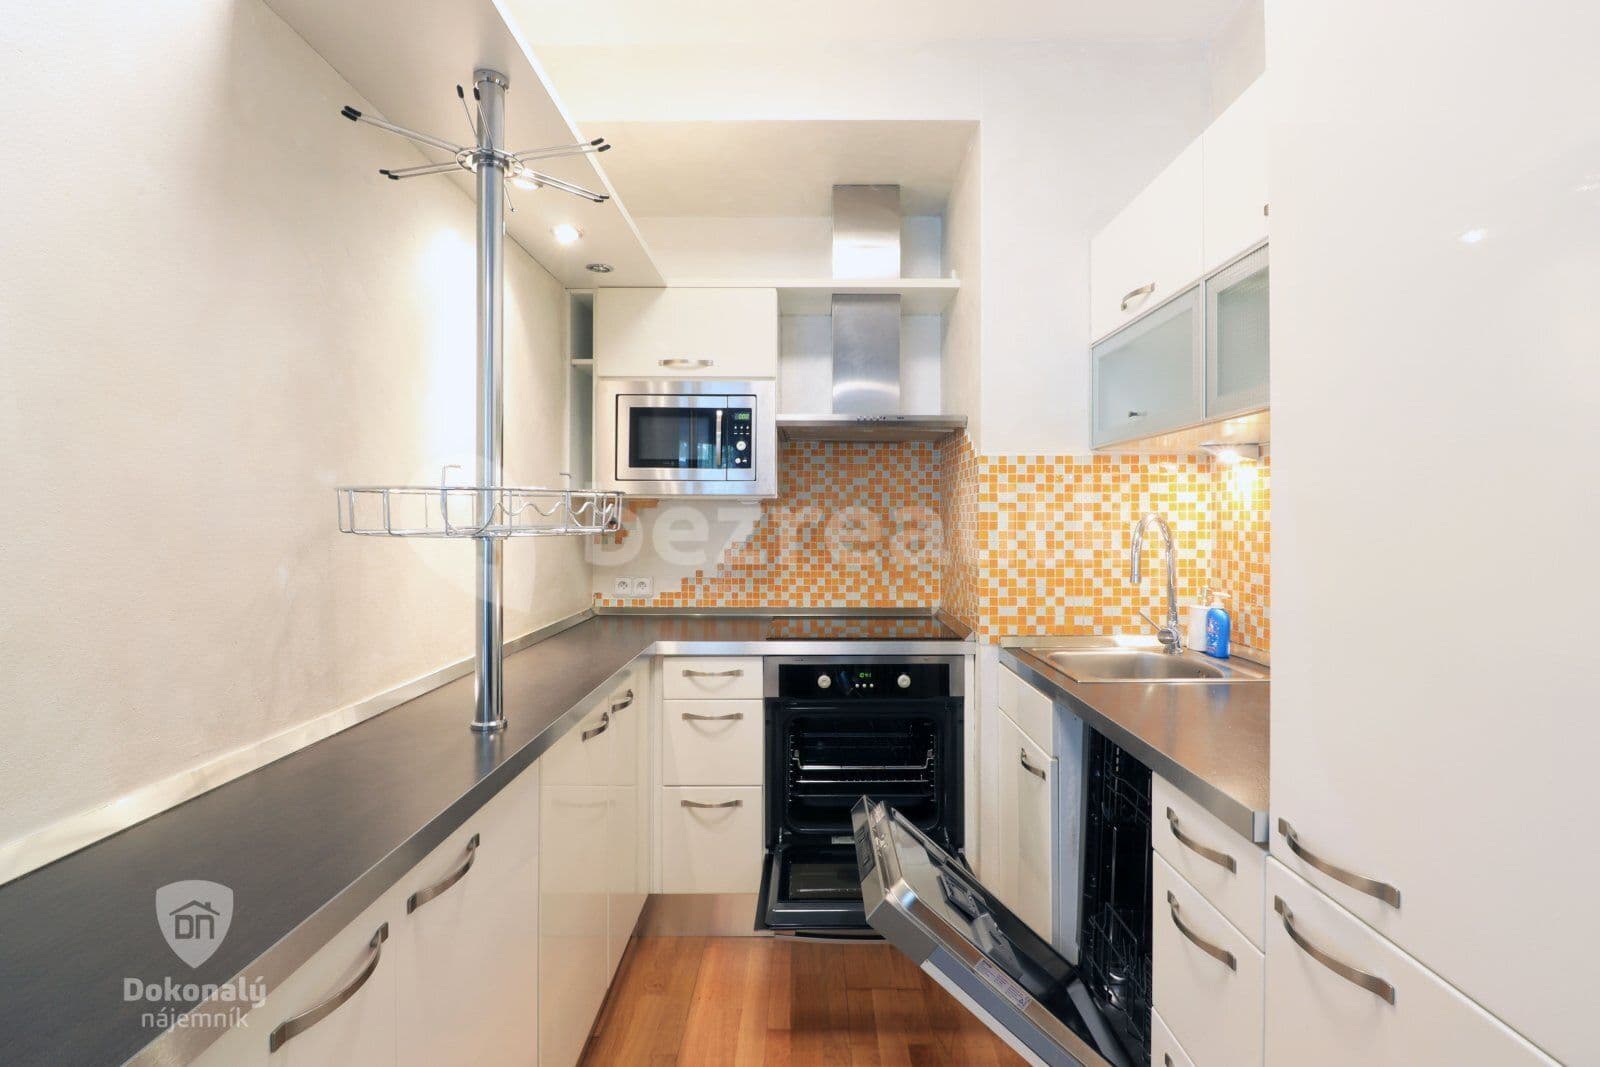 1 bedroom with open-plan kitchen flat to rent, 58 m², Mattioliho, Prague, Prague